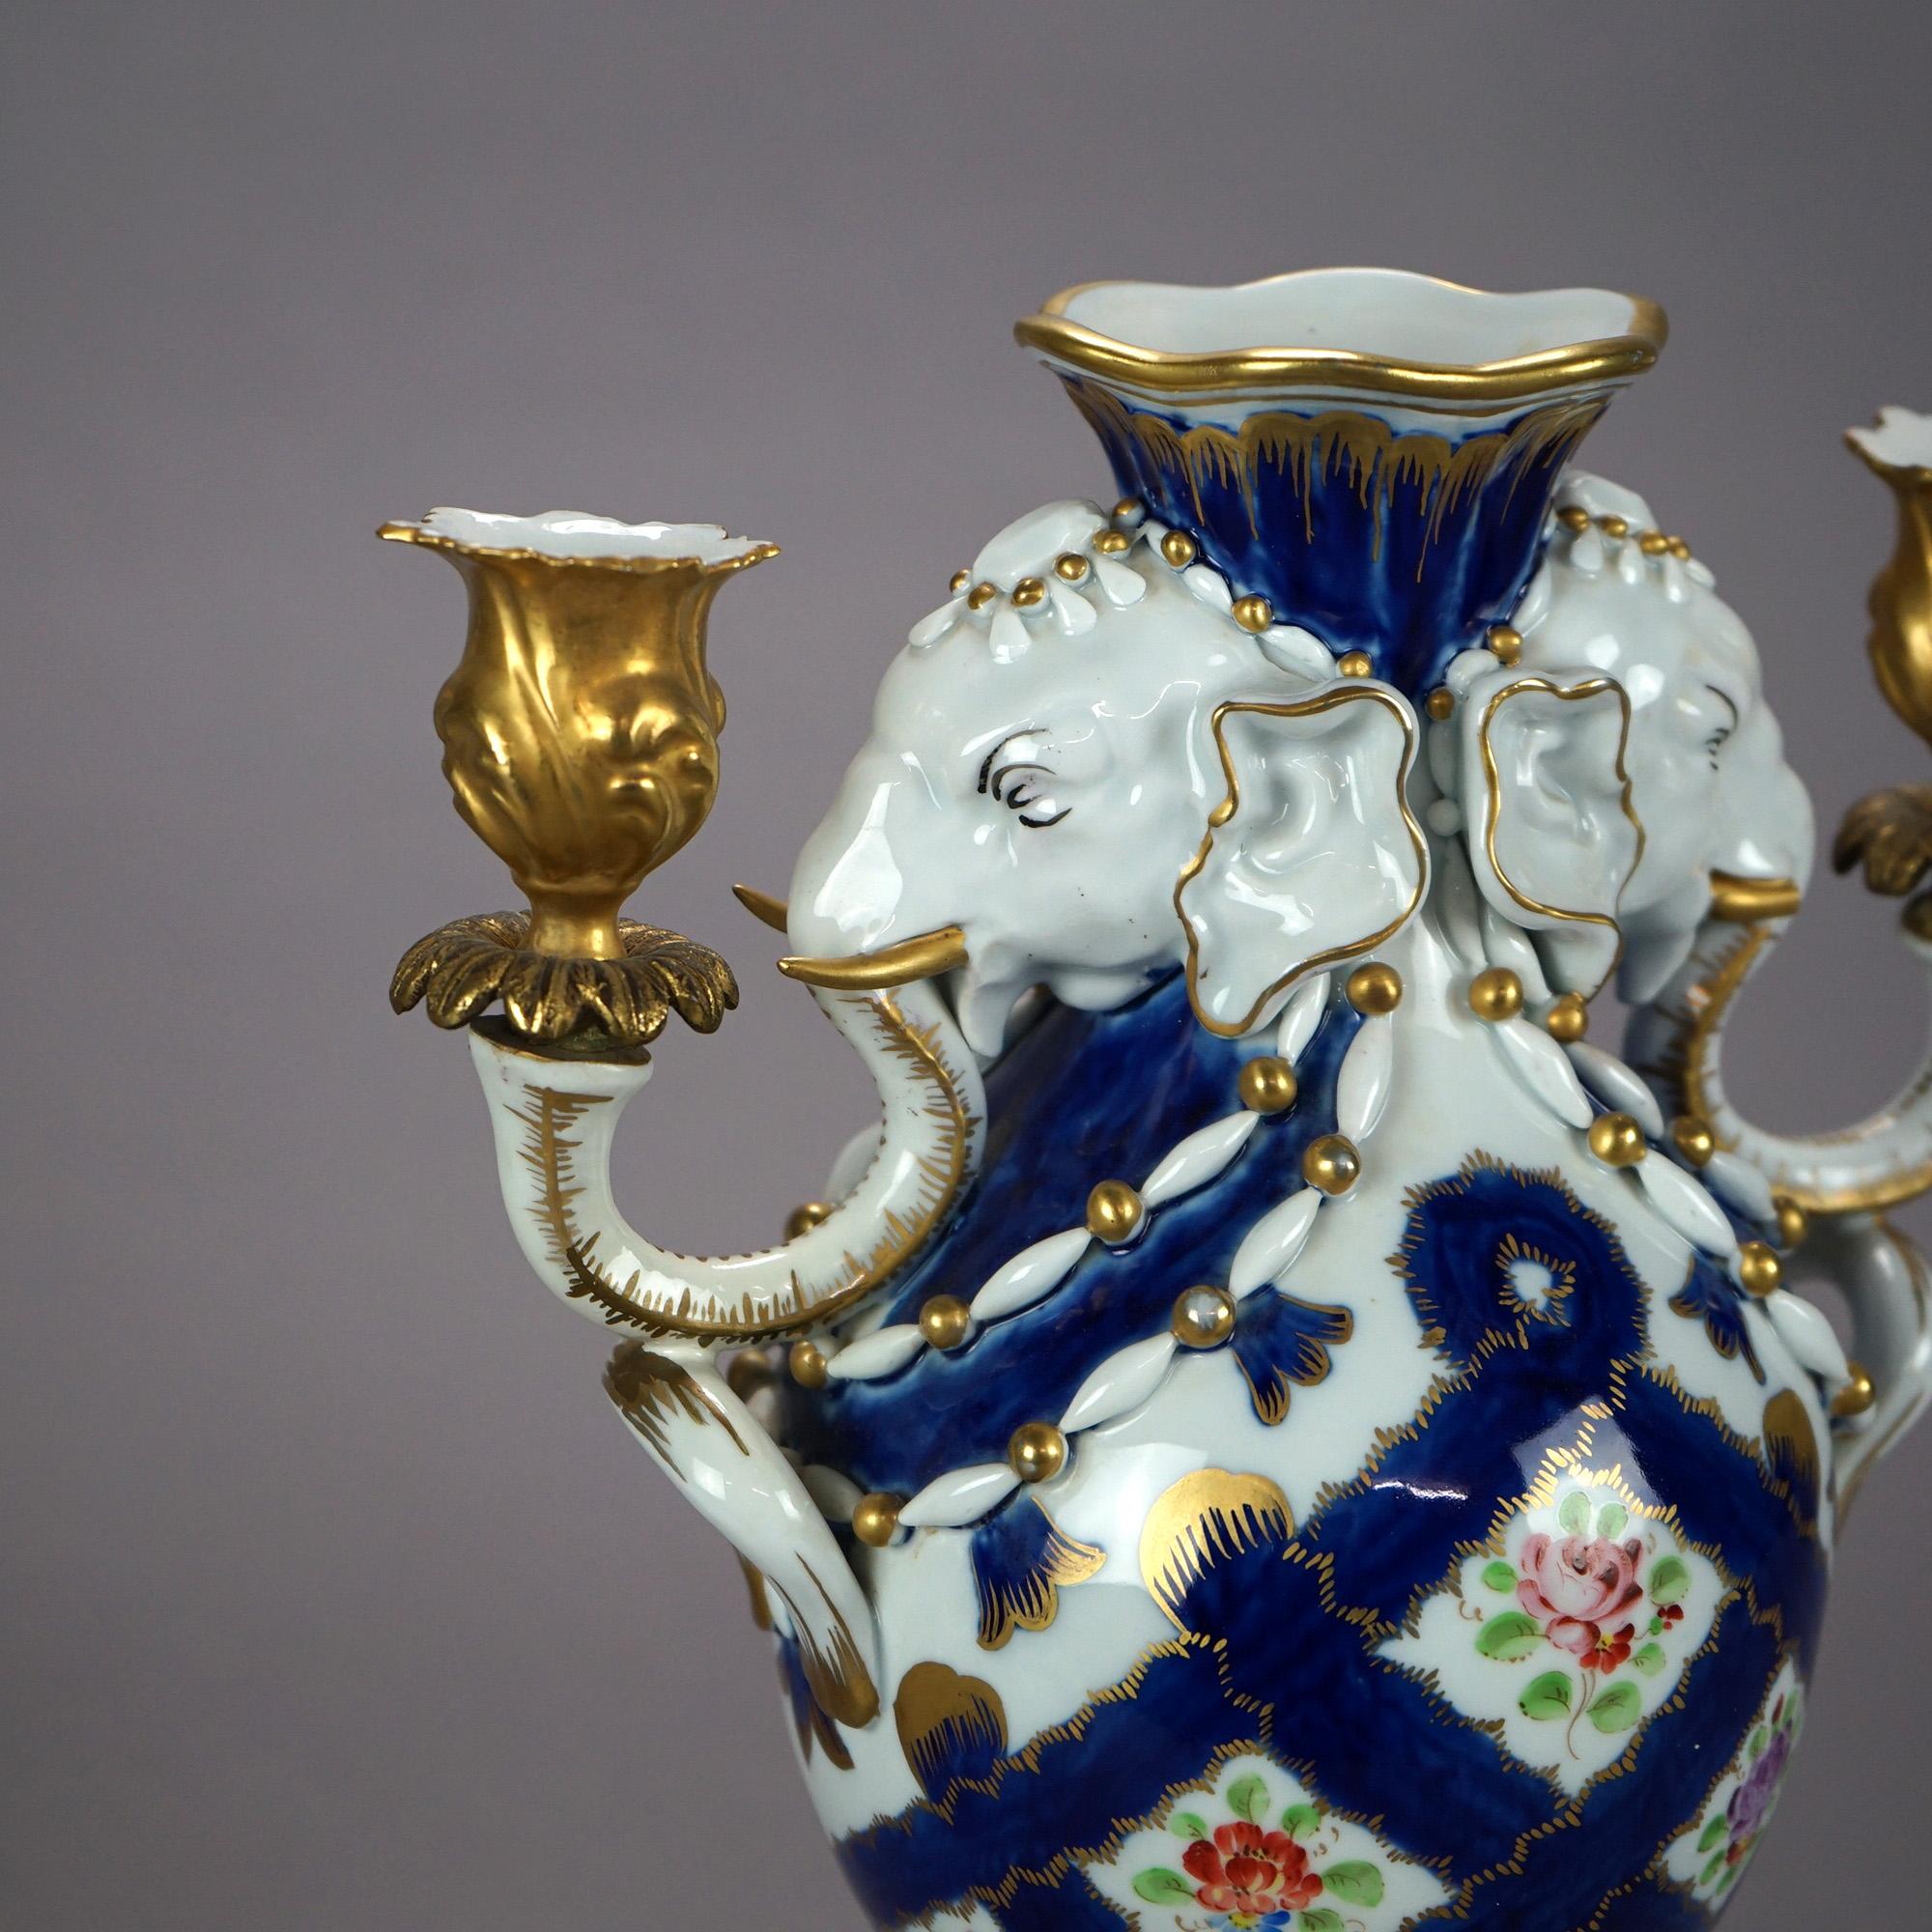 20th Century Italian Figural Porcelain Candelabra Urns with Elephants for Bonwit Teller 20thC For Sale